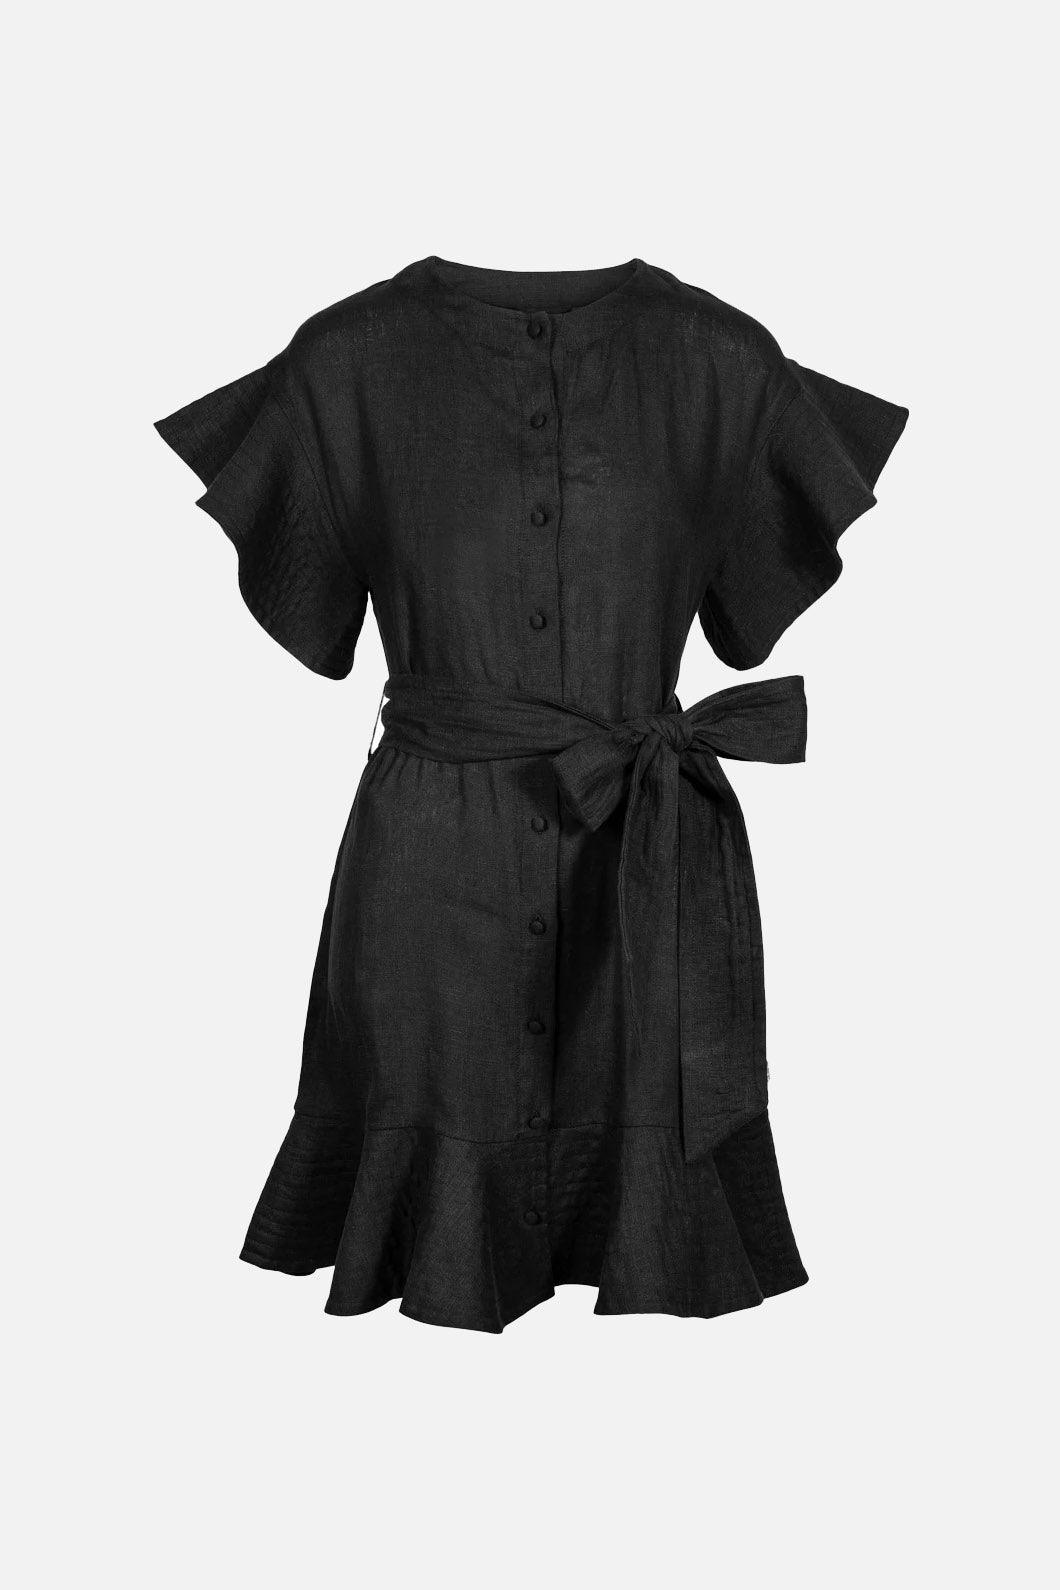 Fia Linen Dress Black - No22 Damplassen